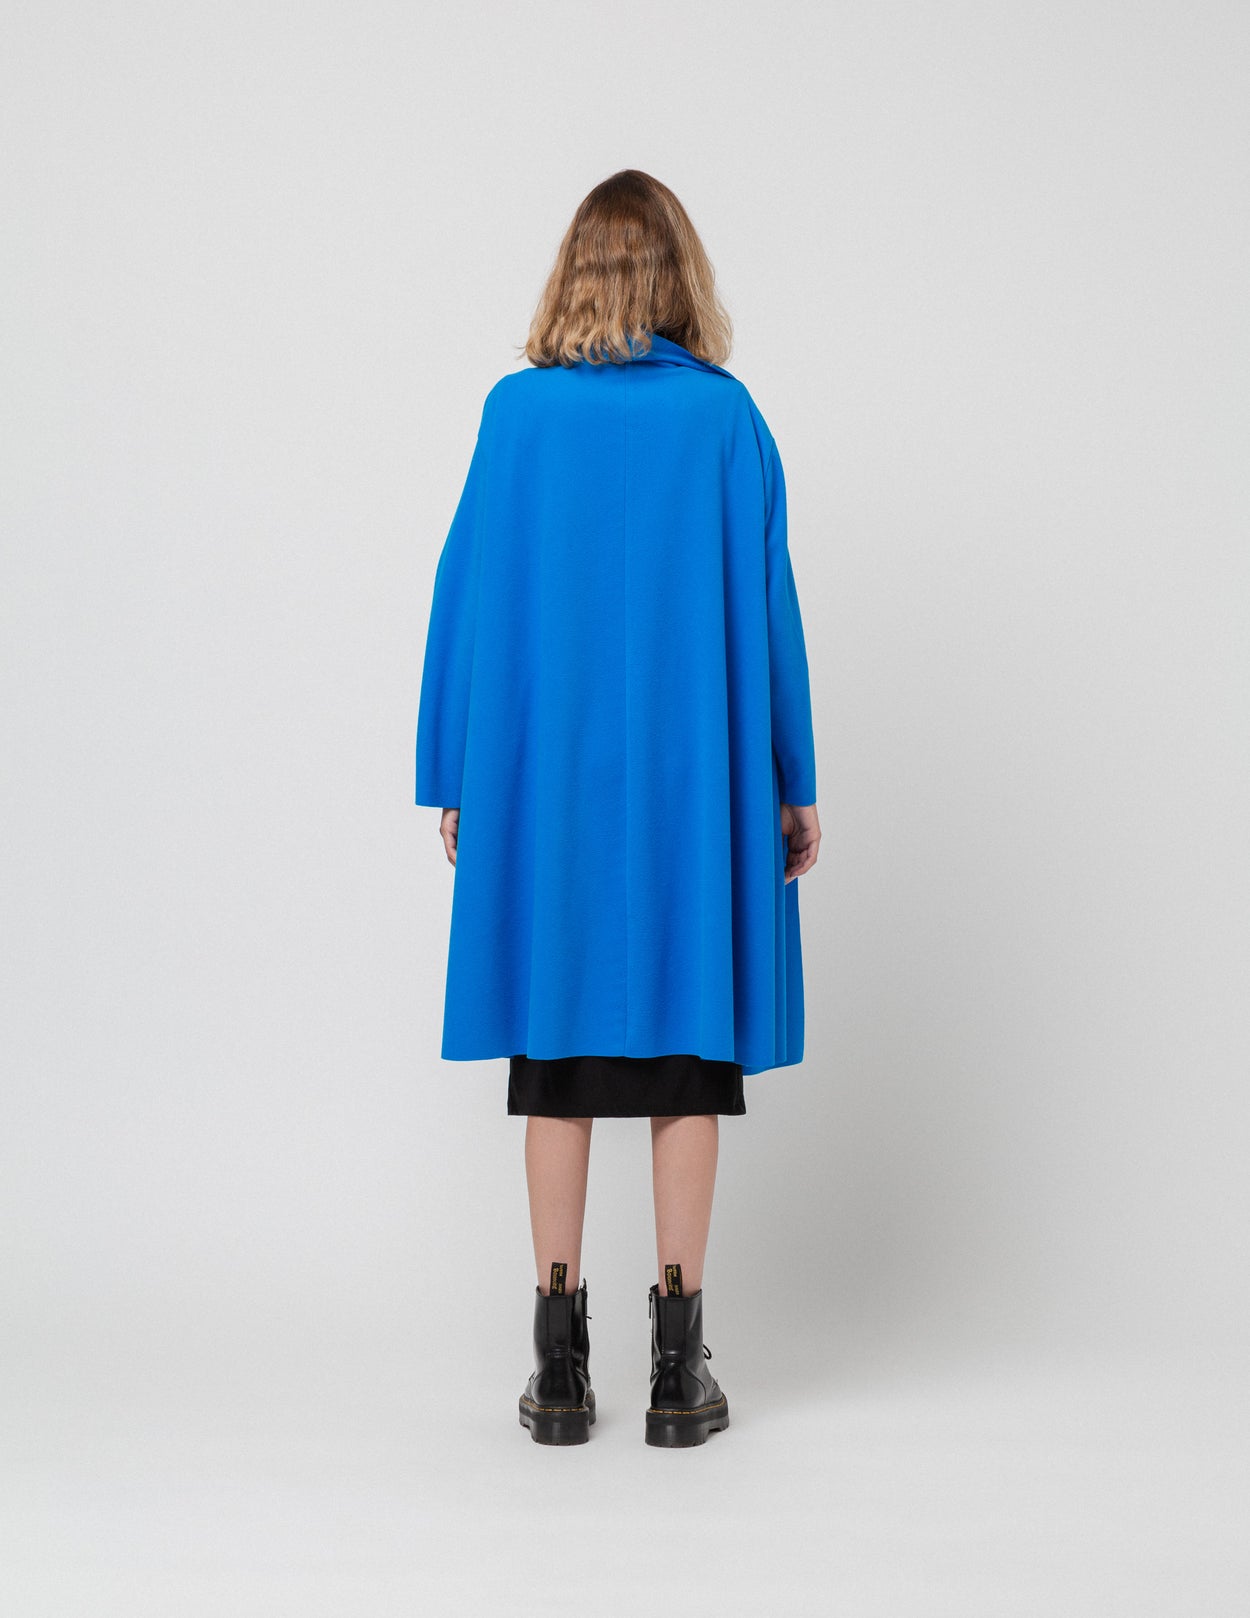 Blue Blanket Coat